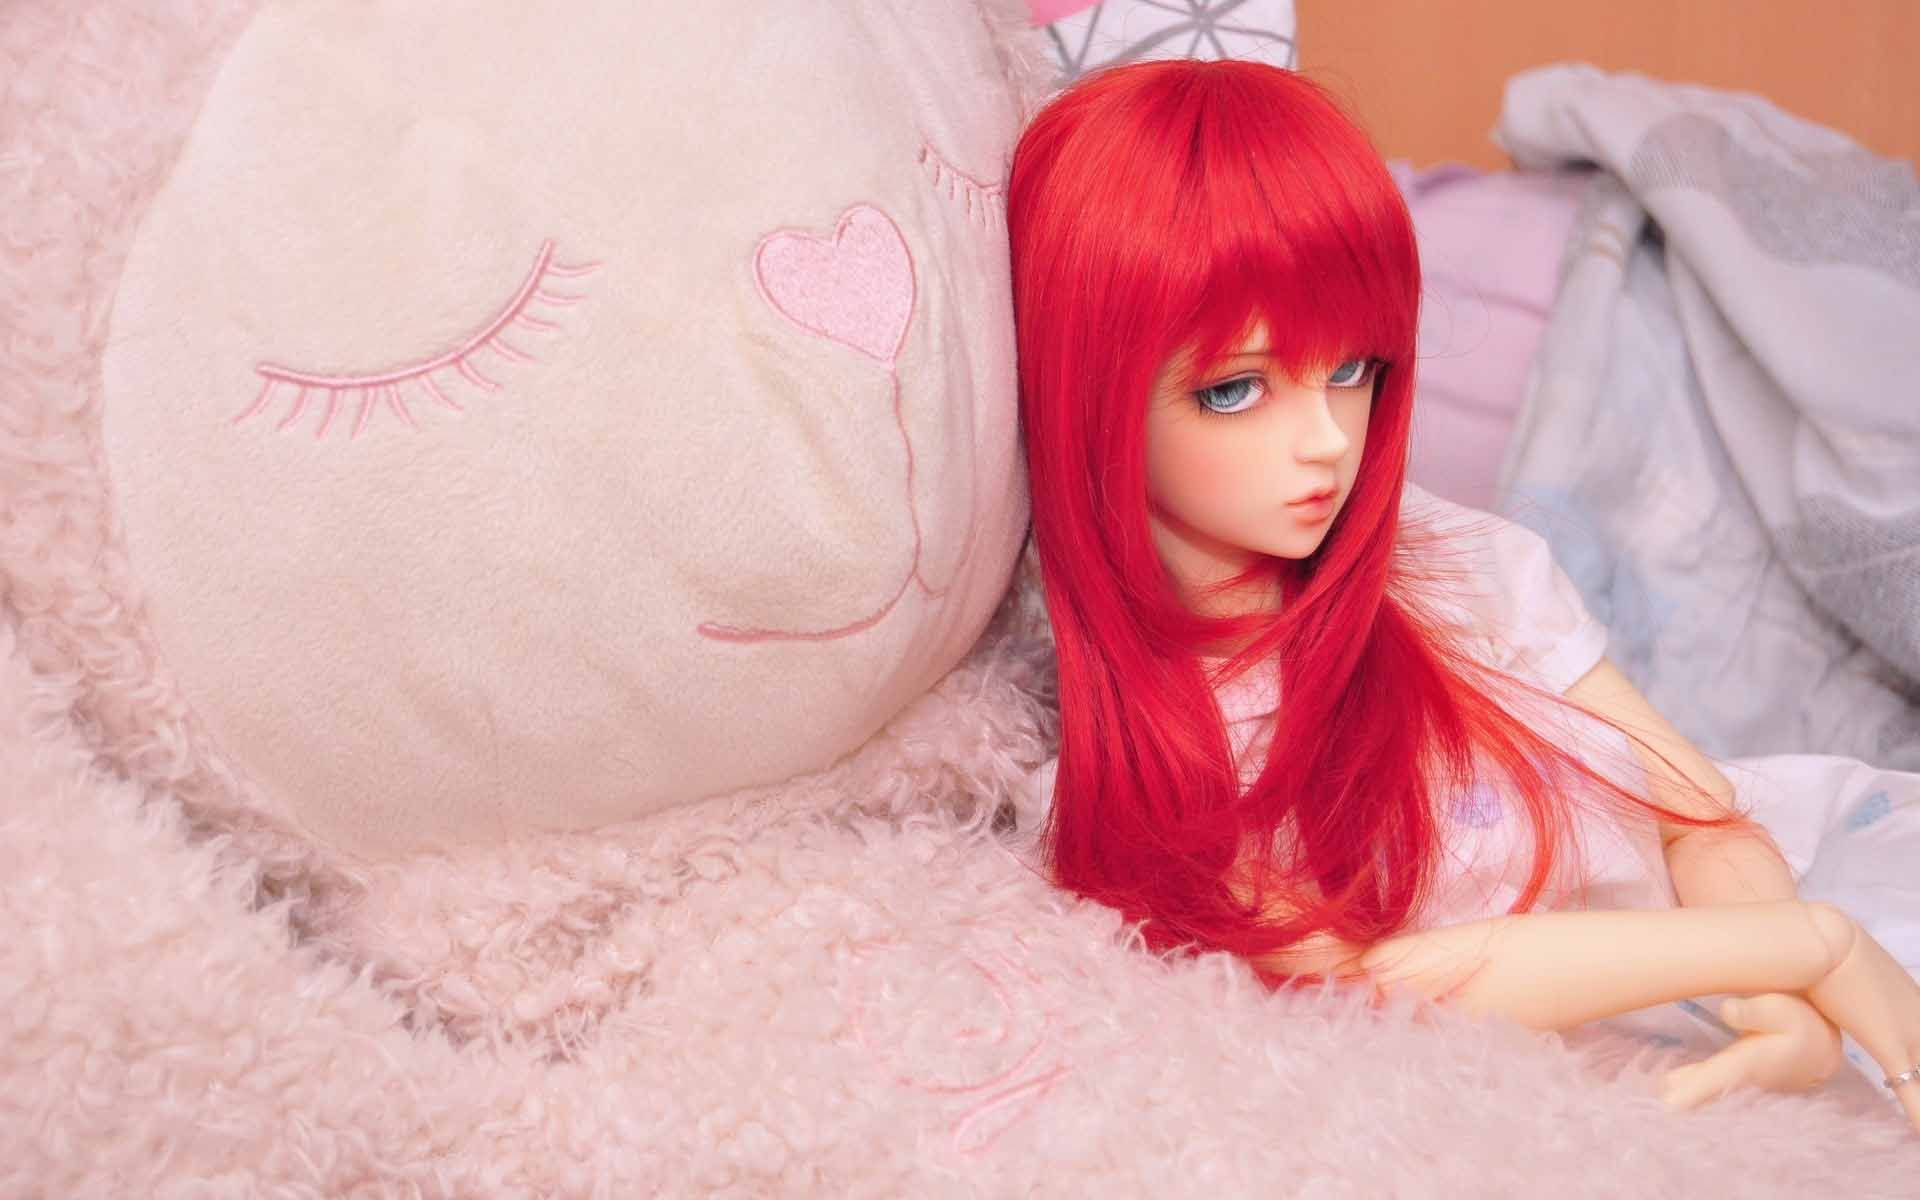 Redhead Doll Toy Hd Wallpaper Wallpaper - Cute Doll Teddy Bear - HD Wallpaper 